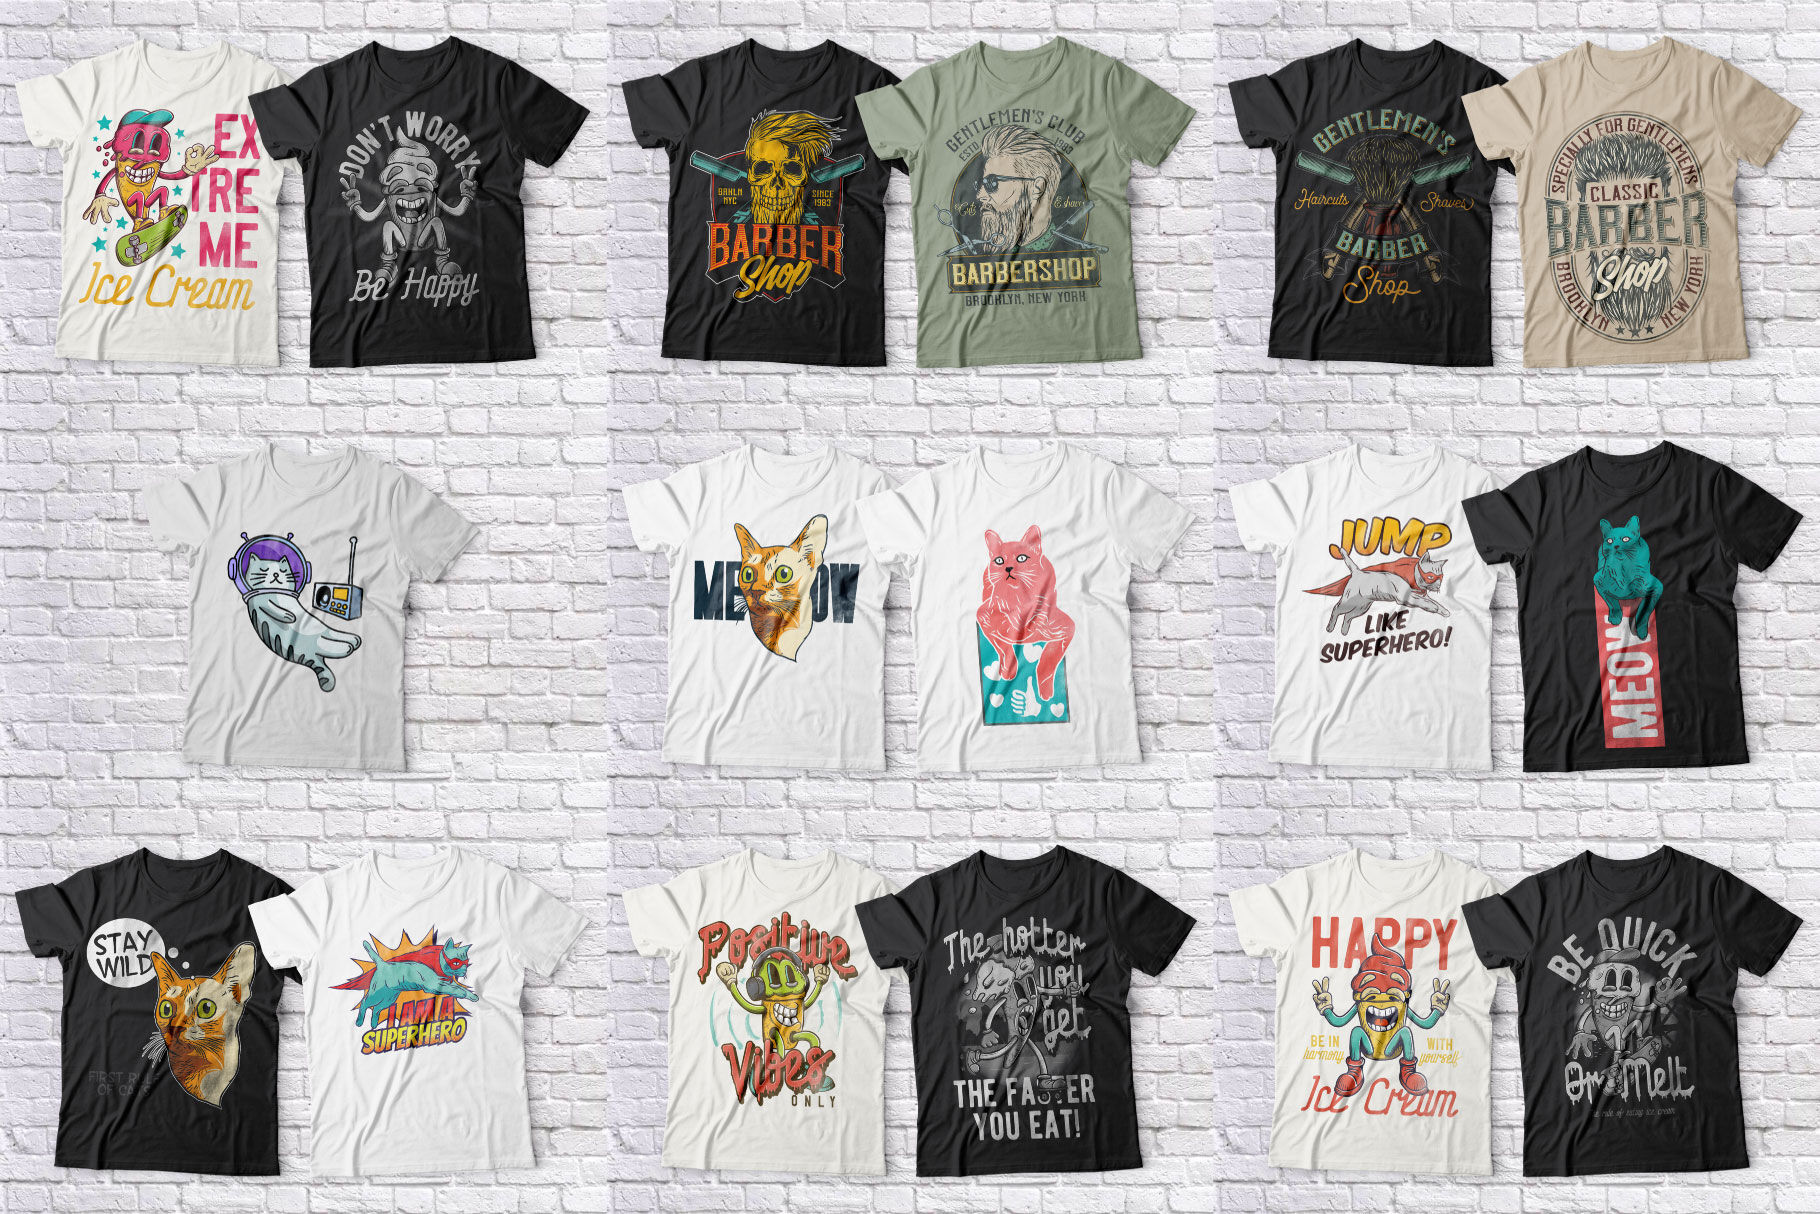 T Shirt Designs Mega Bundle 5 By Vozzy Vintage Fonts And Graphics Thehungryjpeg Com